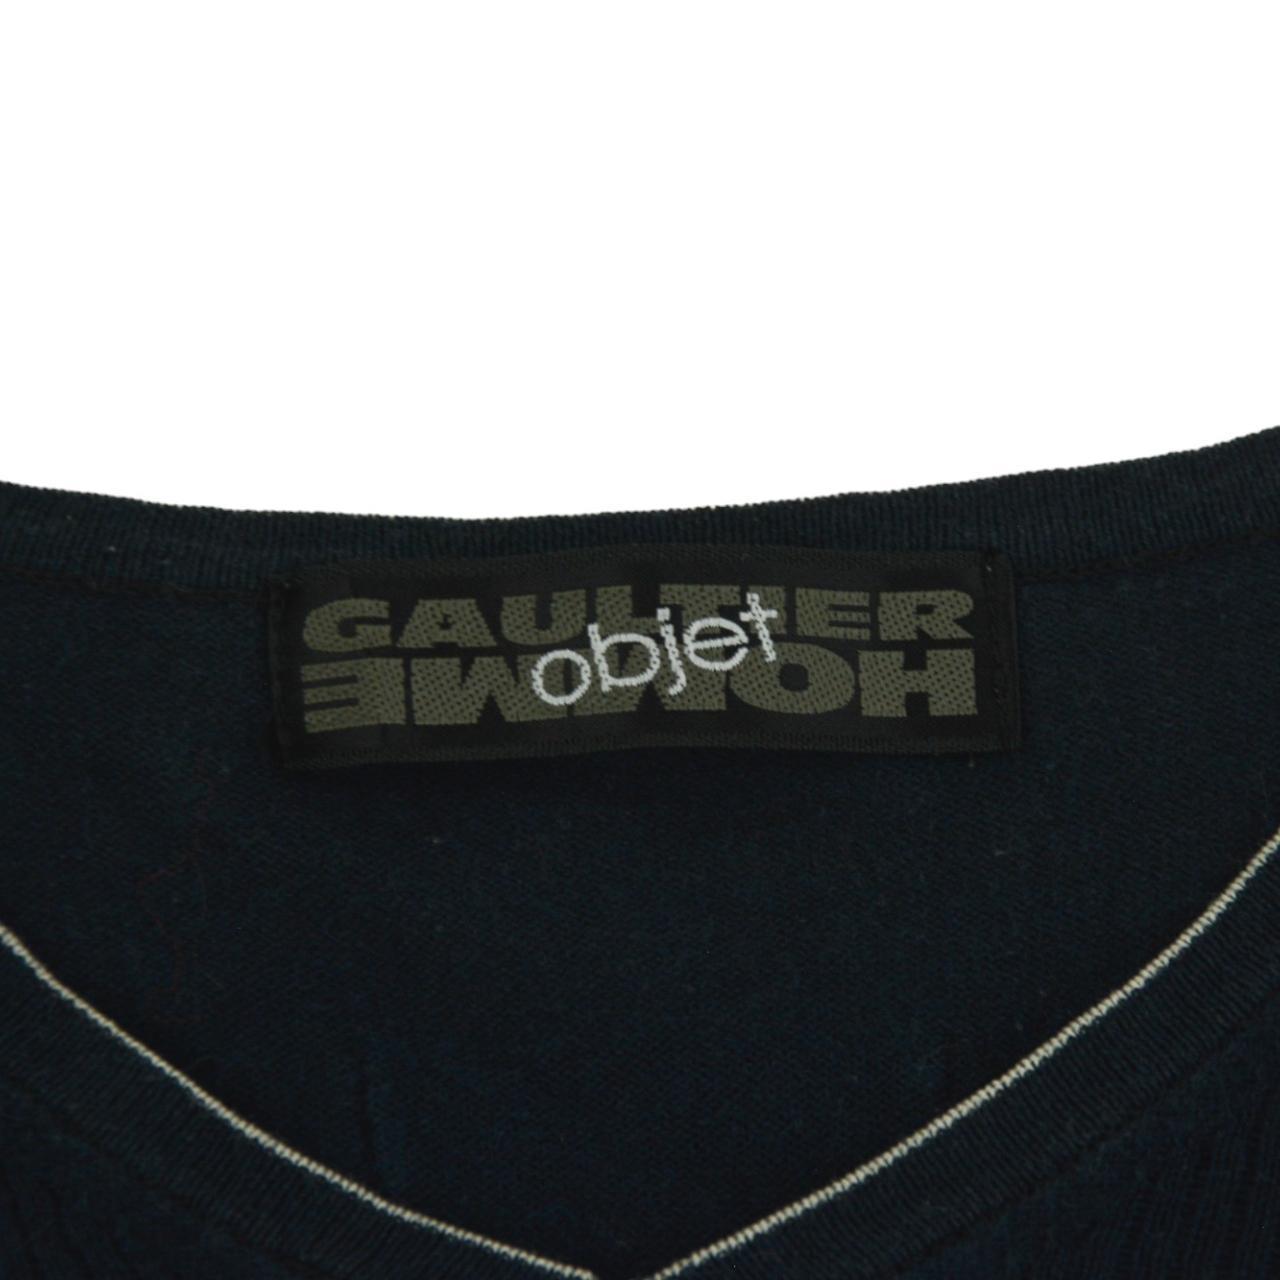 Vintage Gaultier Homme Objet Knit T Shirt Woman’s Size M - Known Source